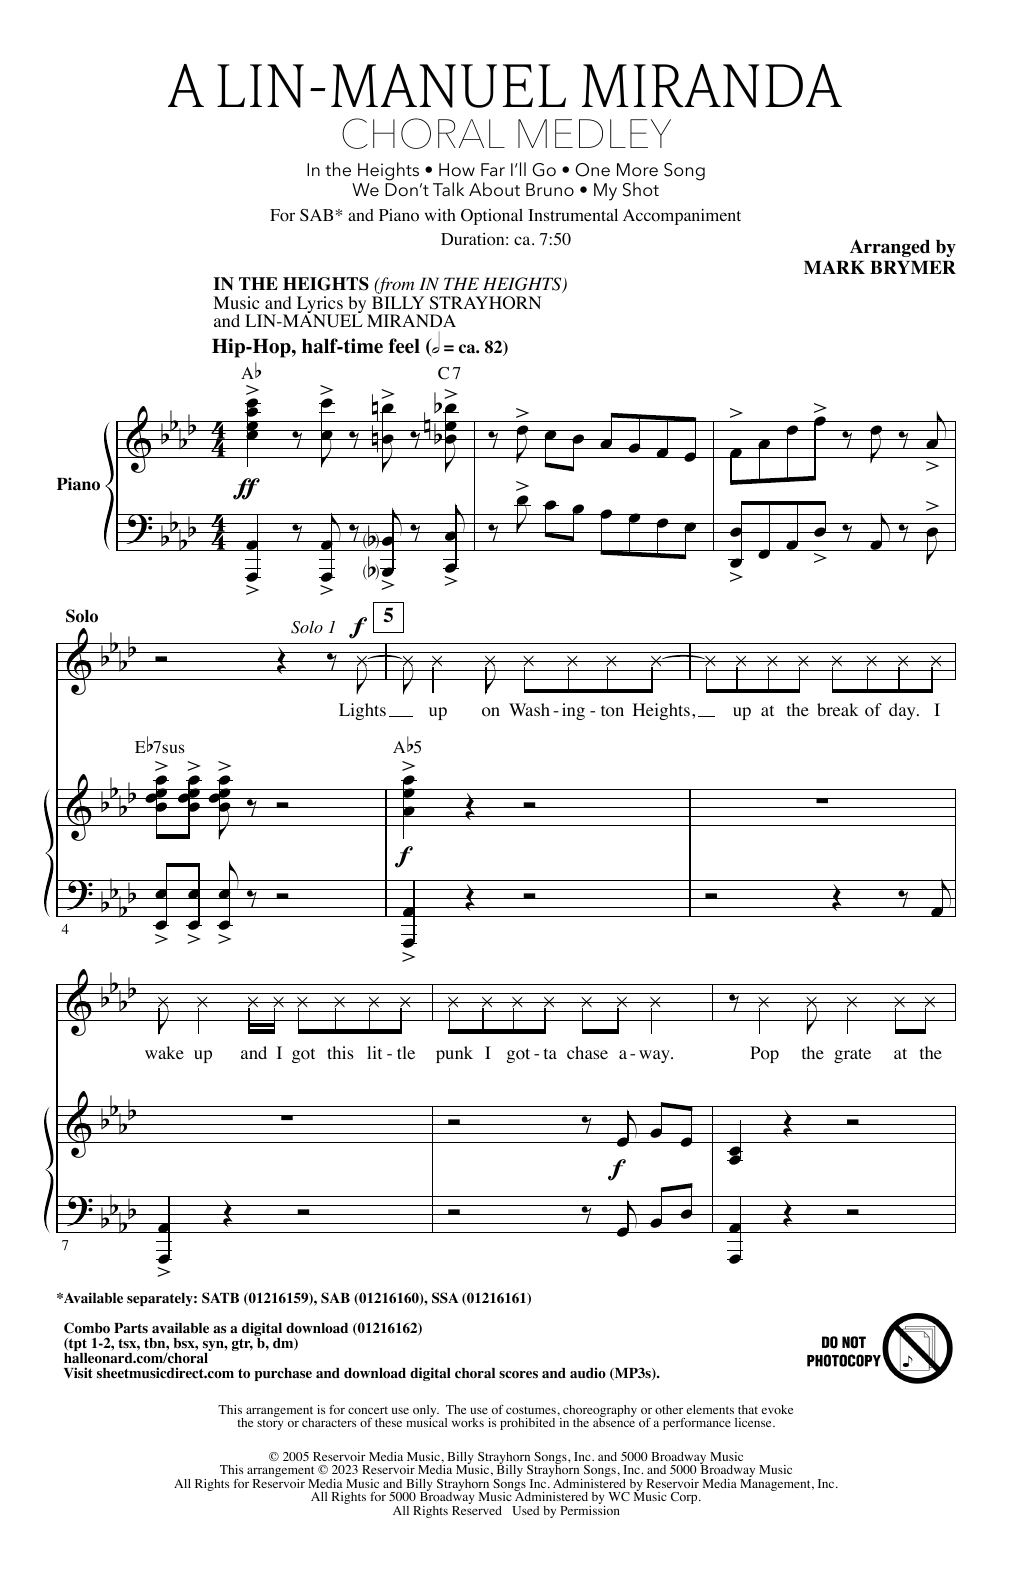 Download Lin-Manuel Miranda A Lin-Manuel Miranda Choral Medley (arr. Mark Brymer) Sheet Music and learn how to play SATB Choir PDF digital score in minutes